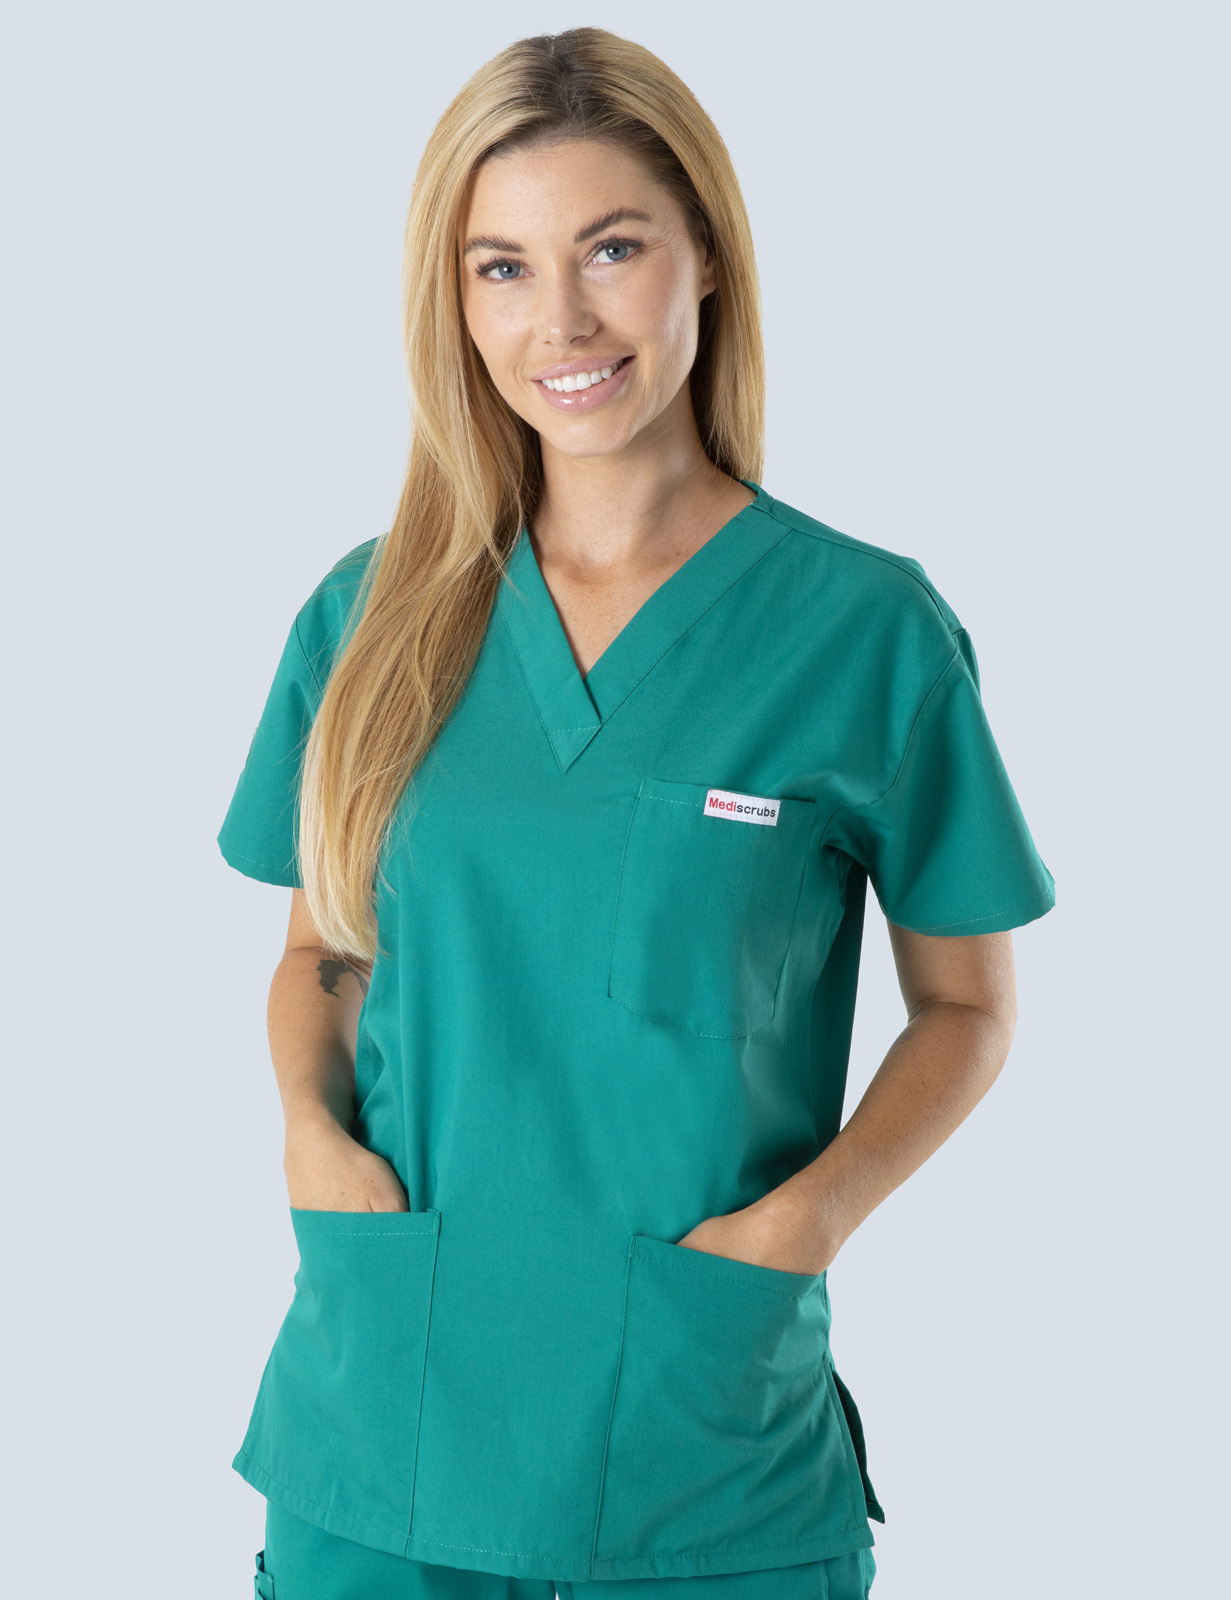 Palm Island Hospital - Nursing (4 Pocket Scrub Top in Hunter incl Logos)